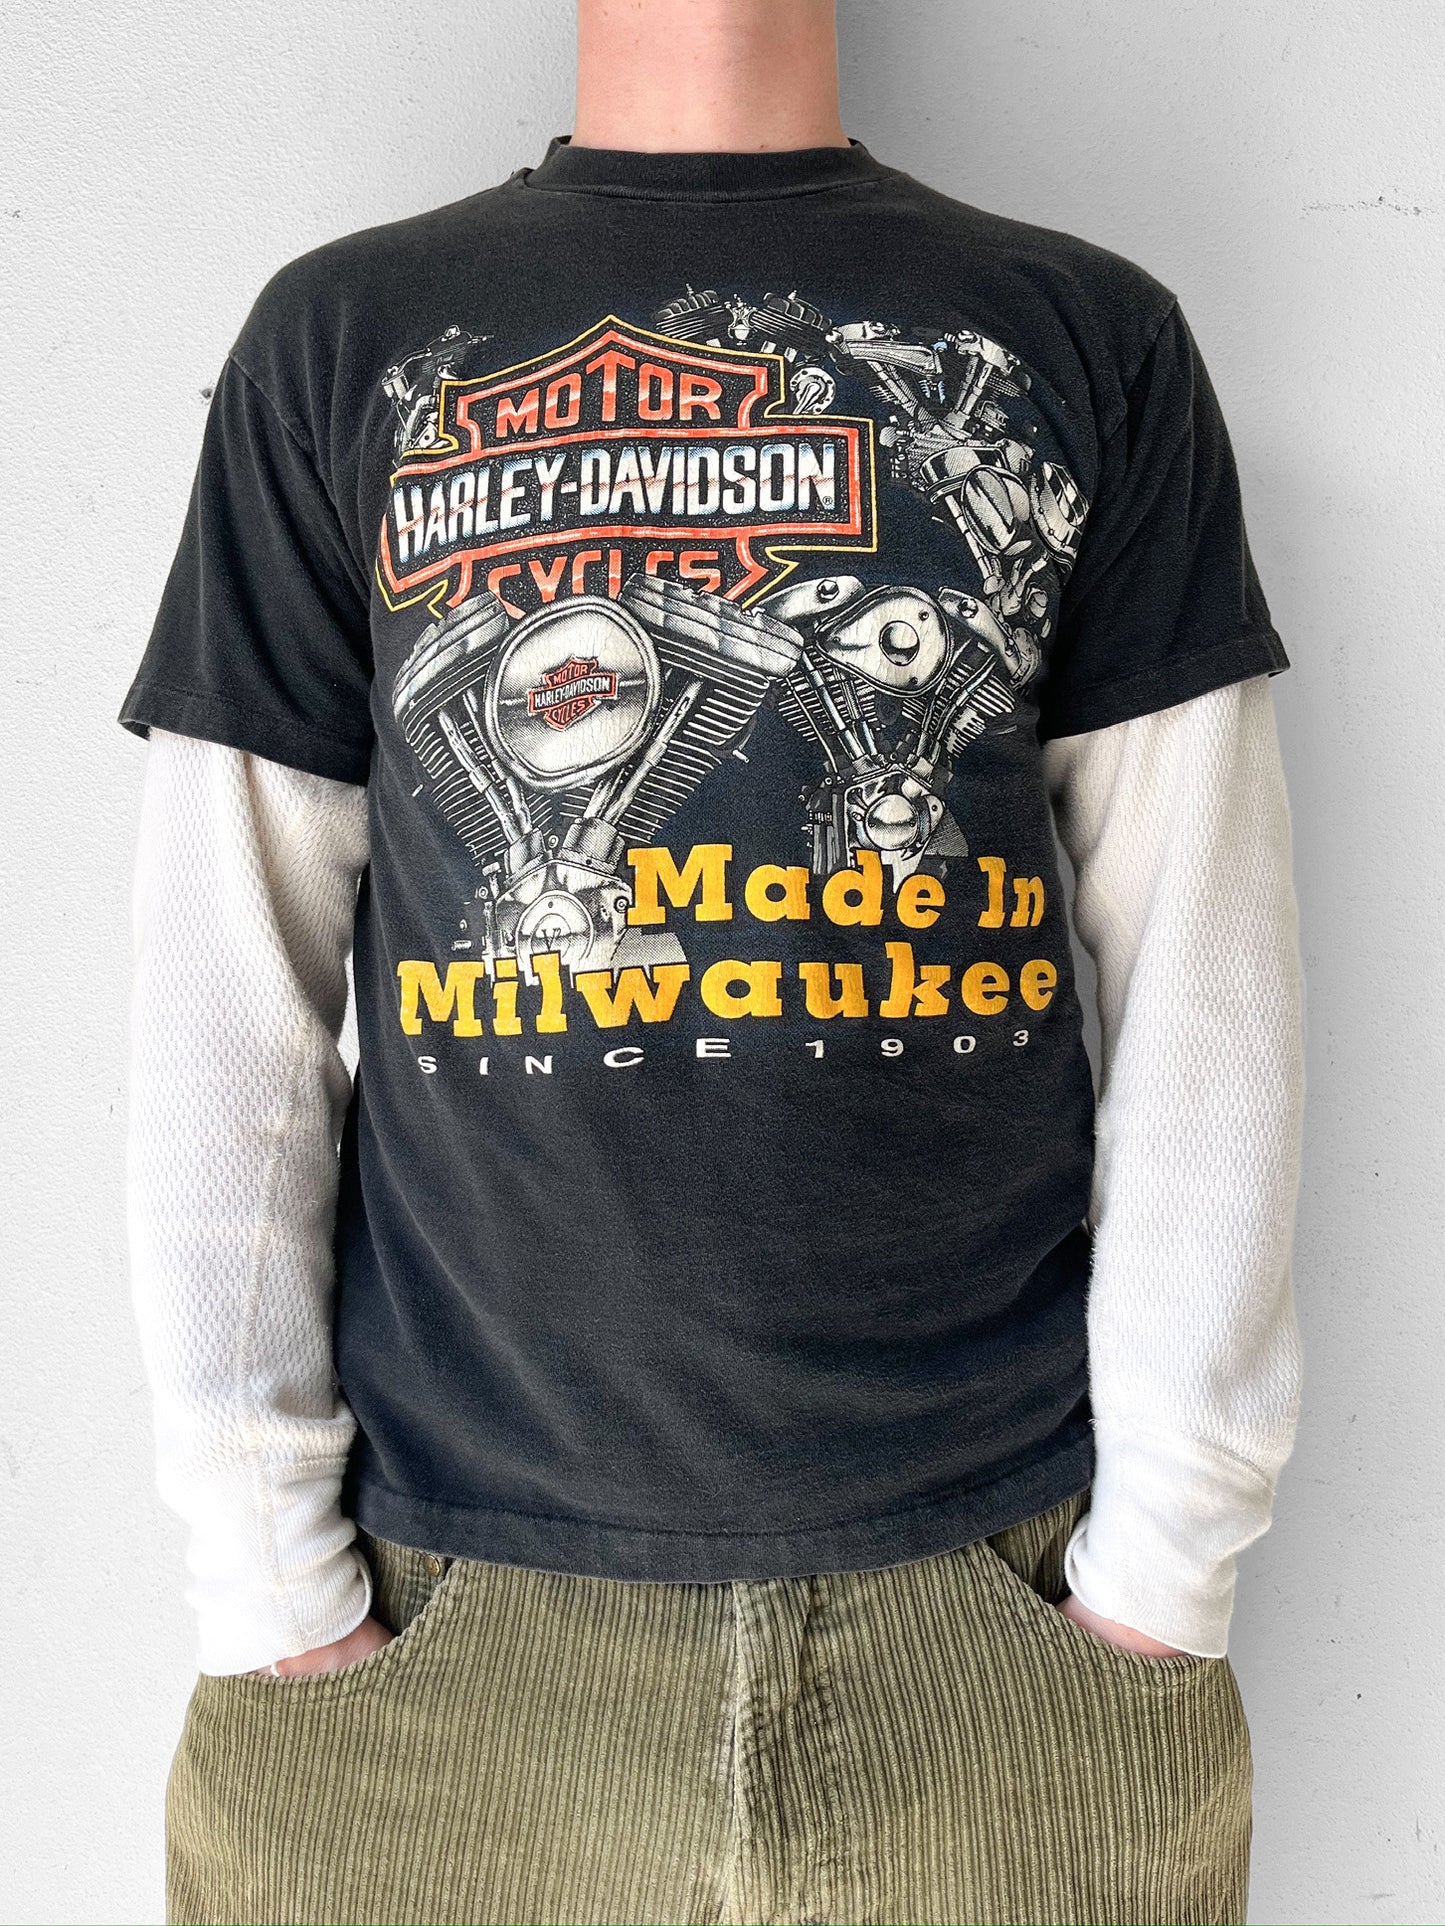 90’s Harley Davidson Milwakee Tonawanda NY Shirt - M